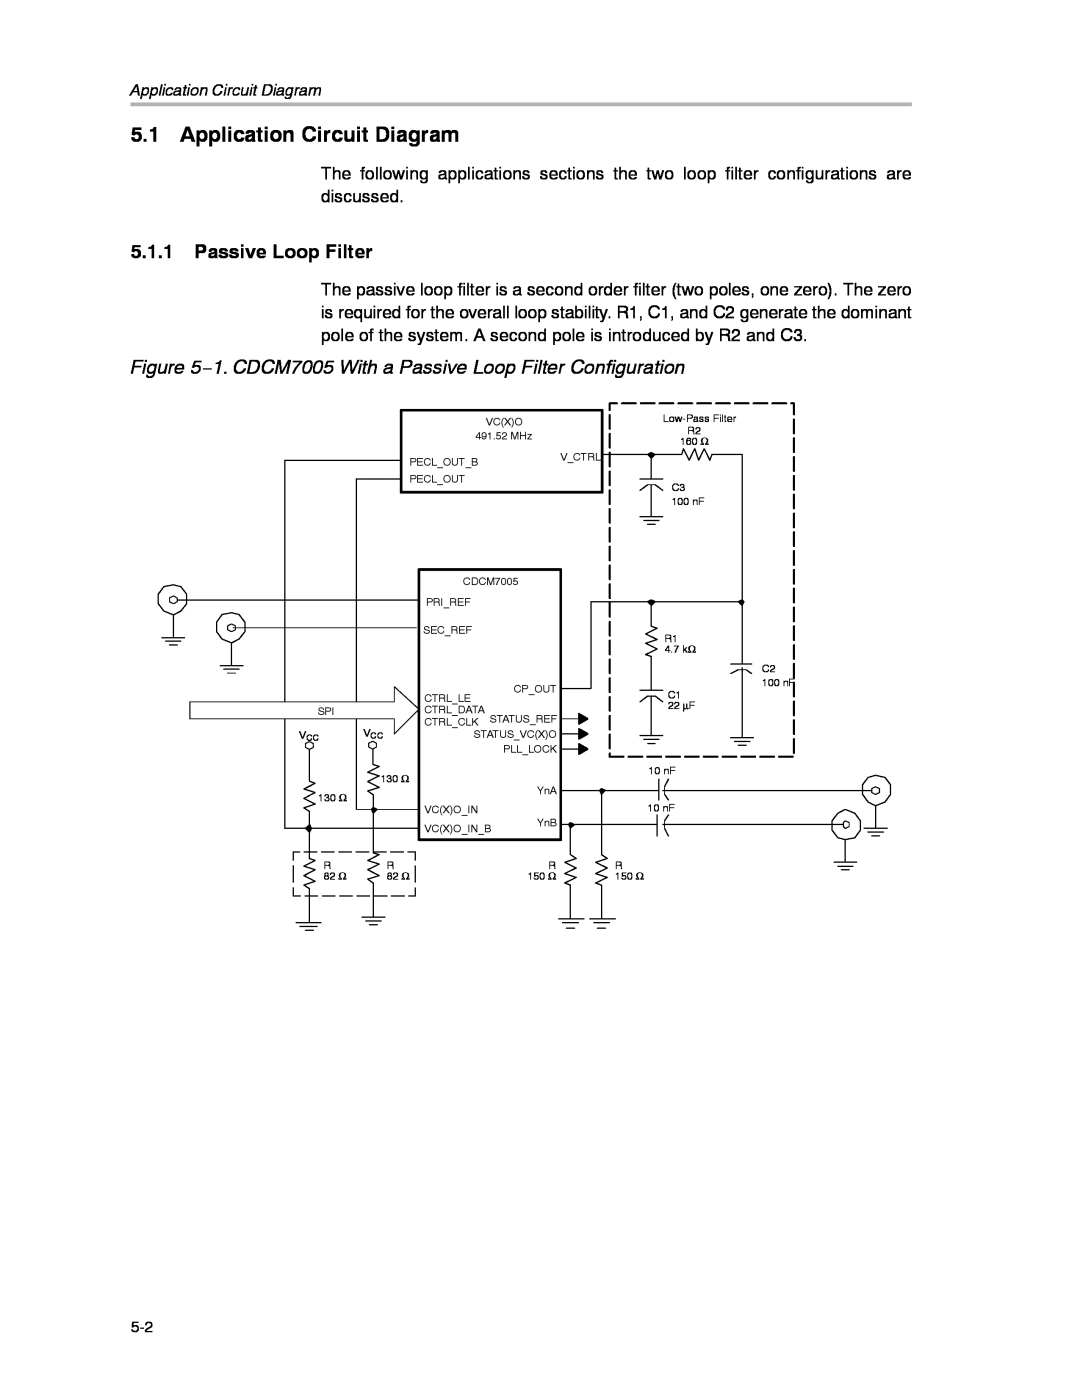 Texas Instruments CDCM7005 manual Application Circuit Diagram, Passive Loop Filter 